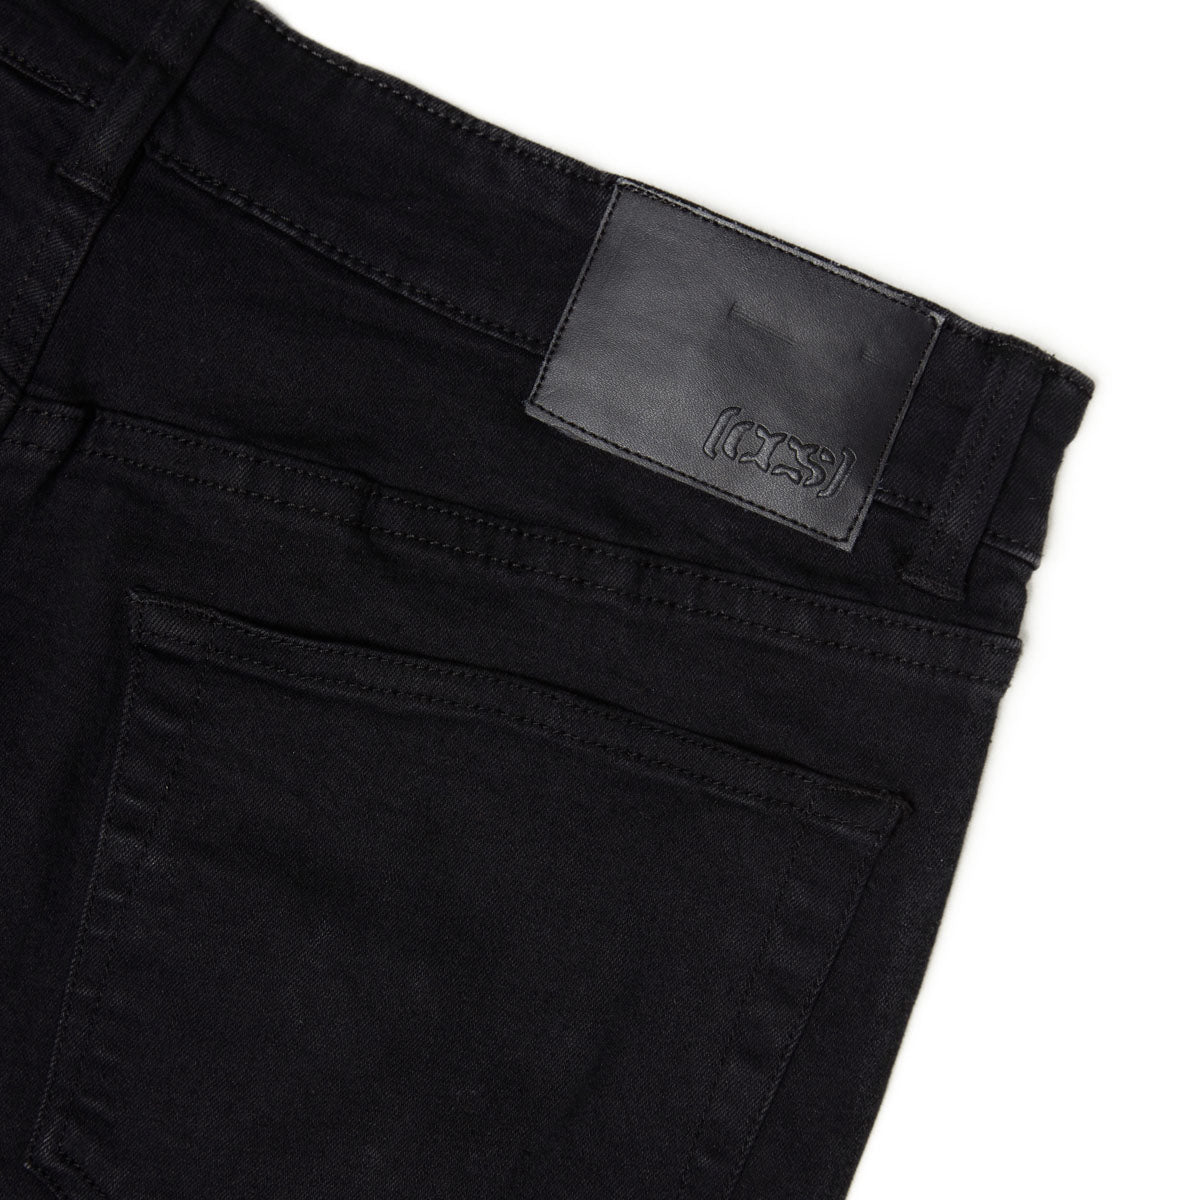 CCS Standard Plus Slim Denim Jeans - Overdyed Black image 6